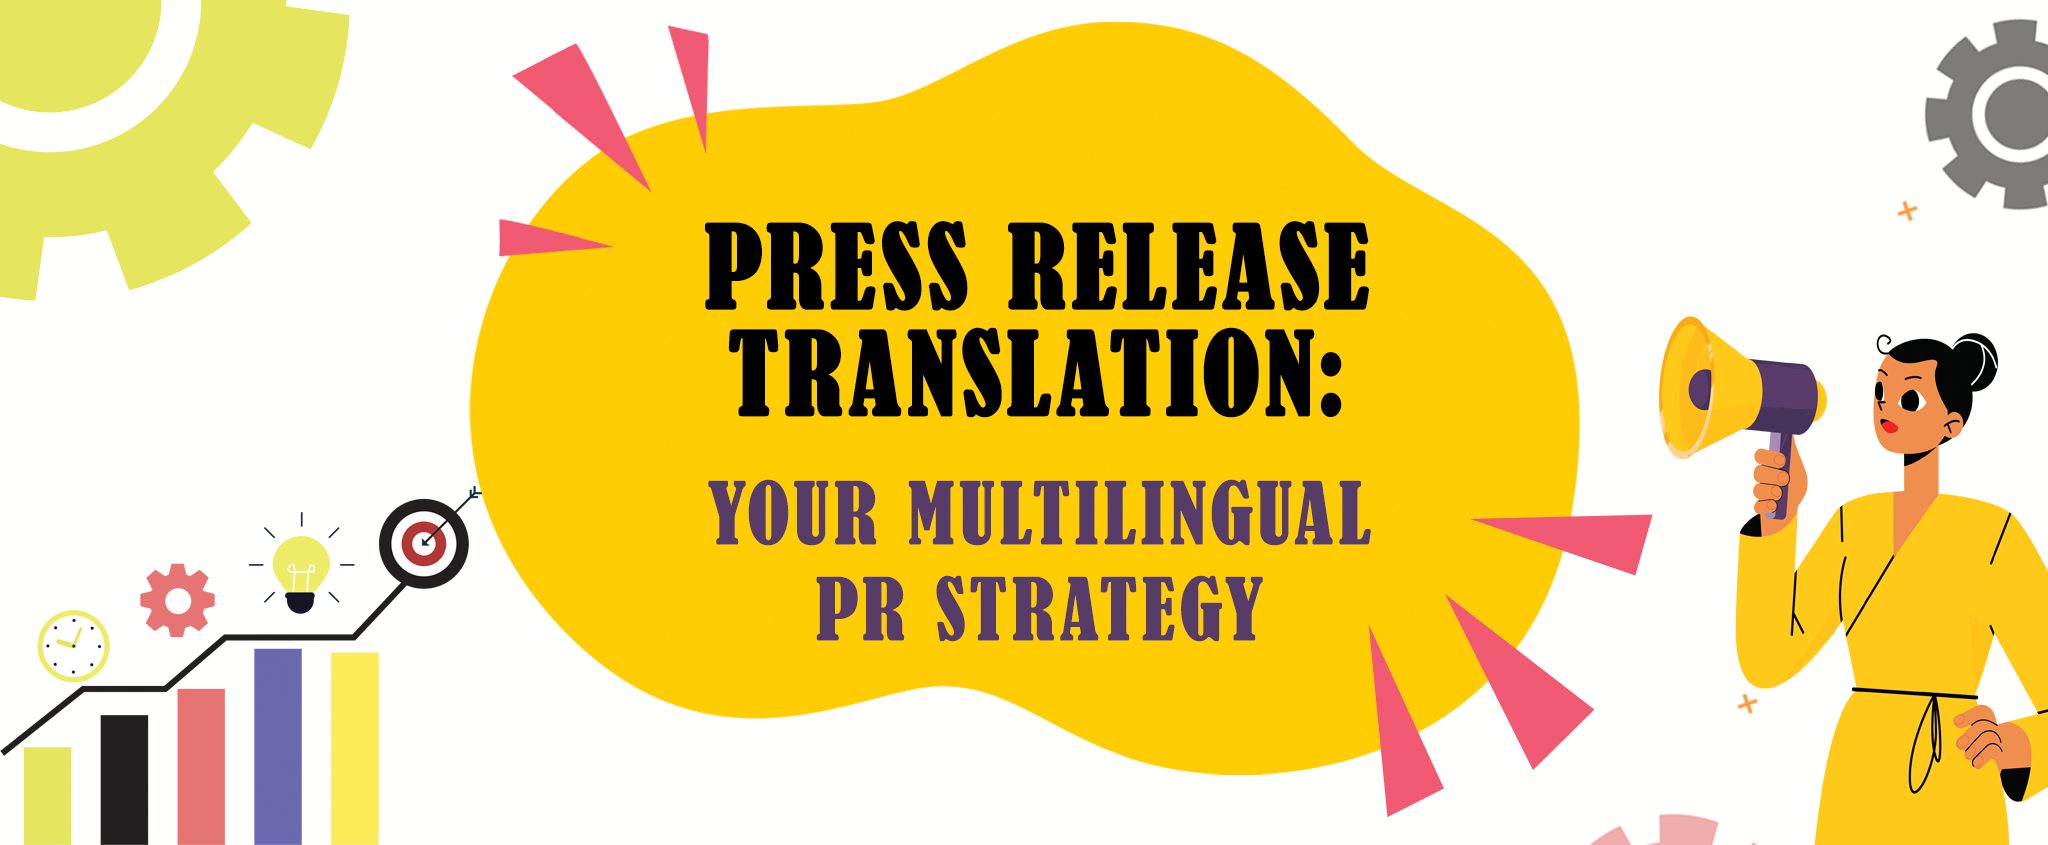 Press Release Translation - Your Multilingual PR Strategy